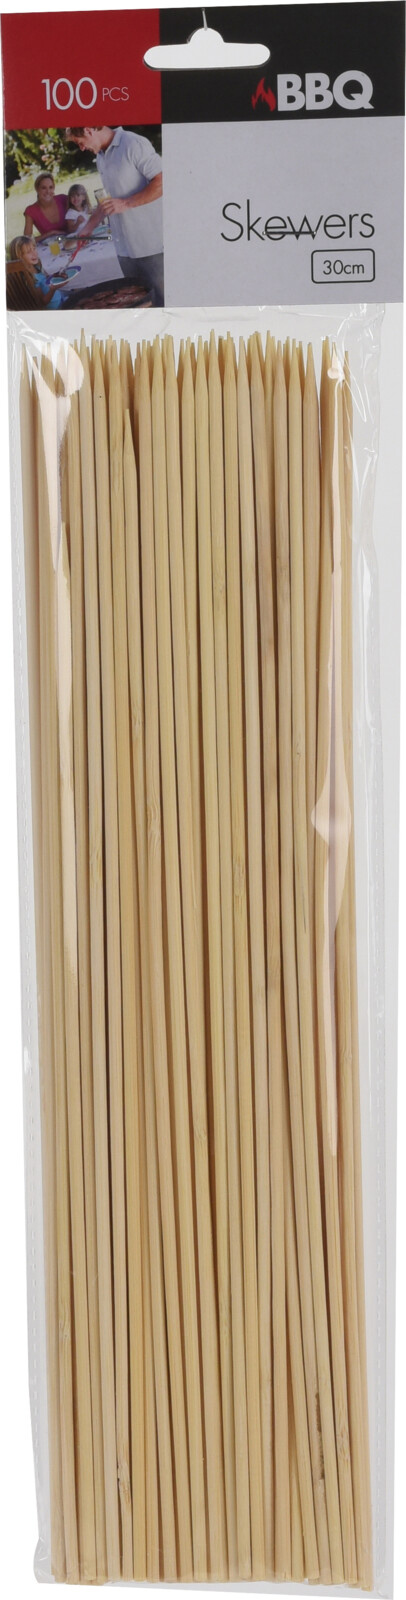 Grillspett bambu 30 cm 100 st